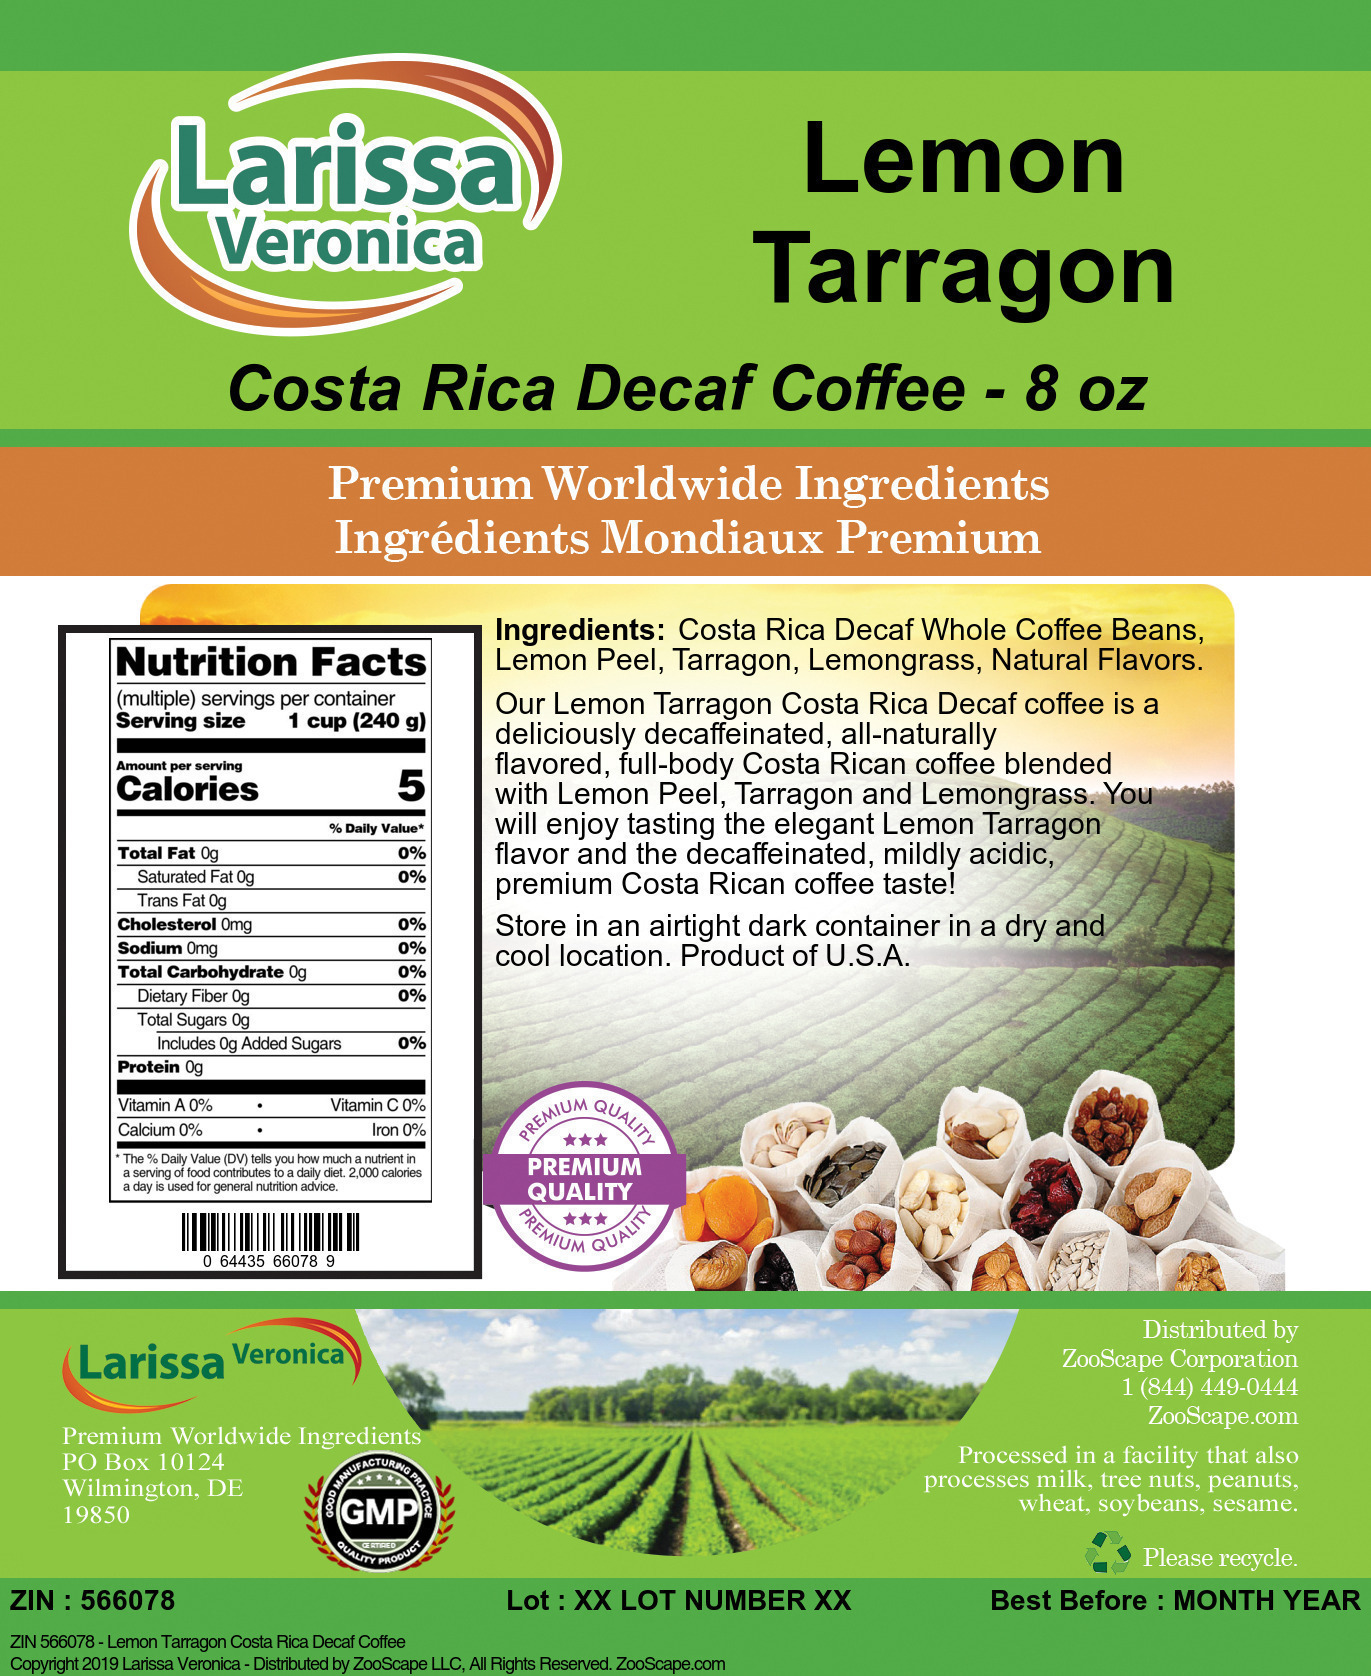 Lemon Tarragon Costa Rica Decaf Coffee - Label